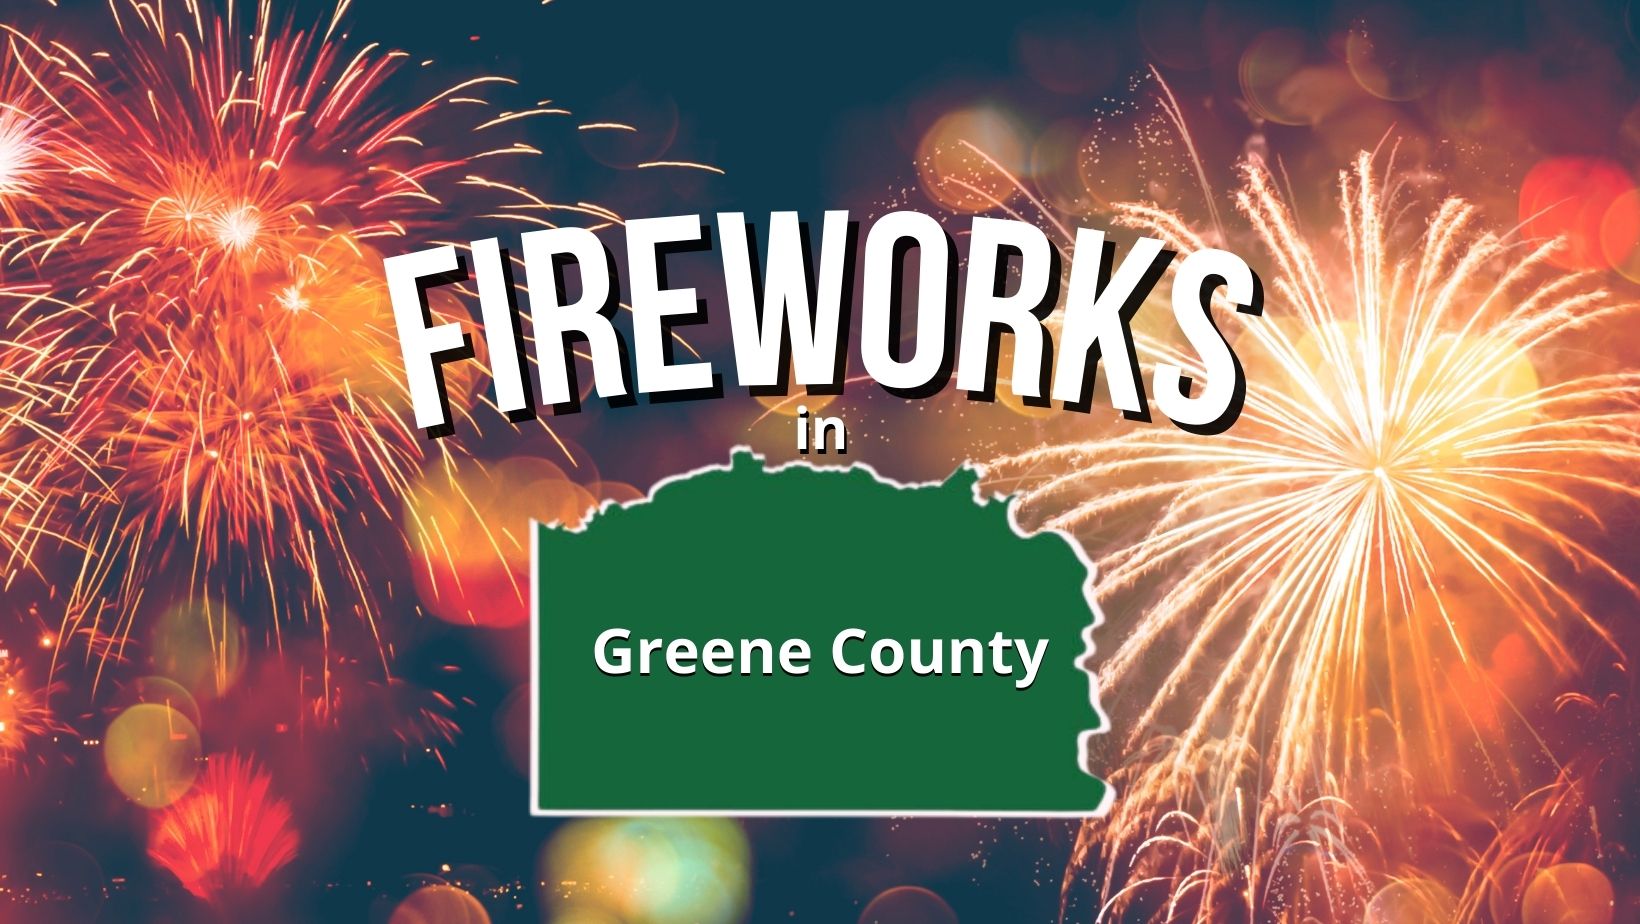 Fireworks in Greene County Visit Greene County